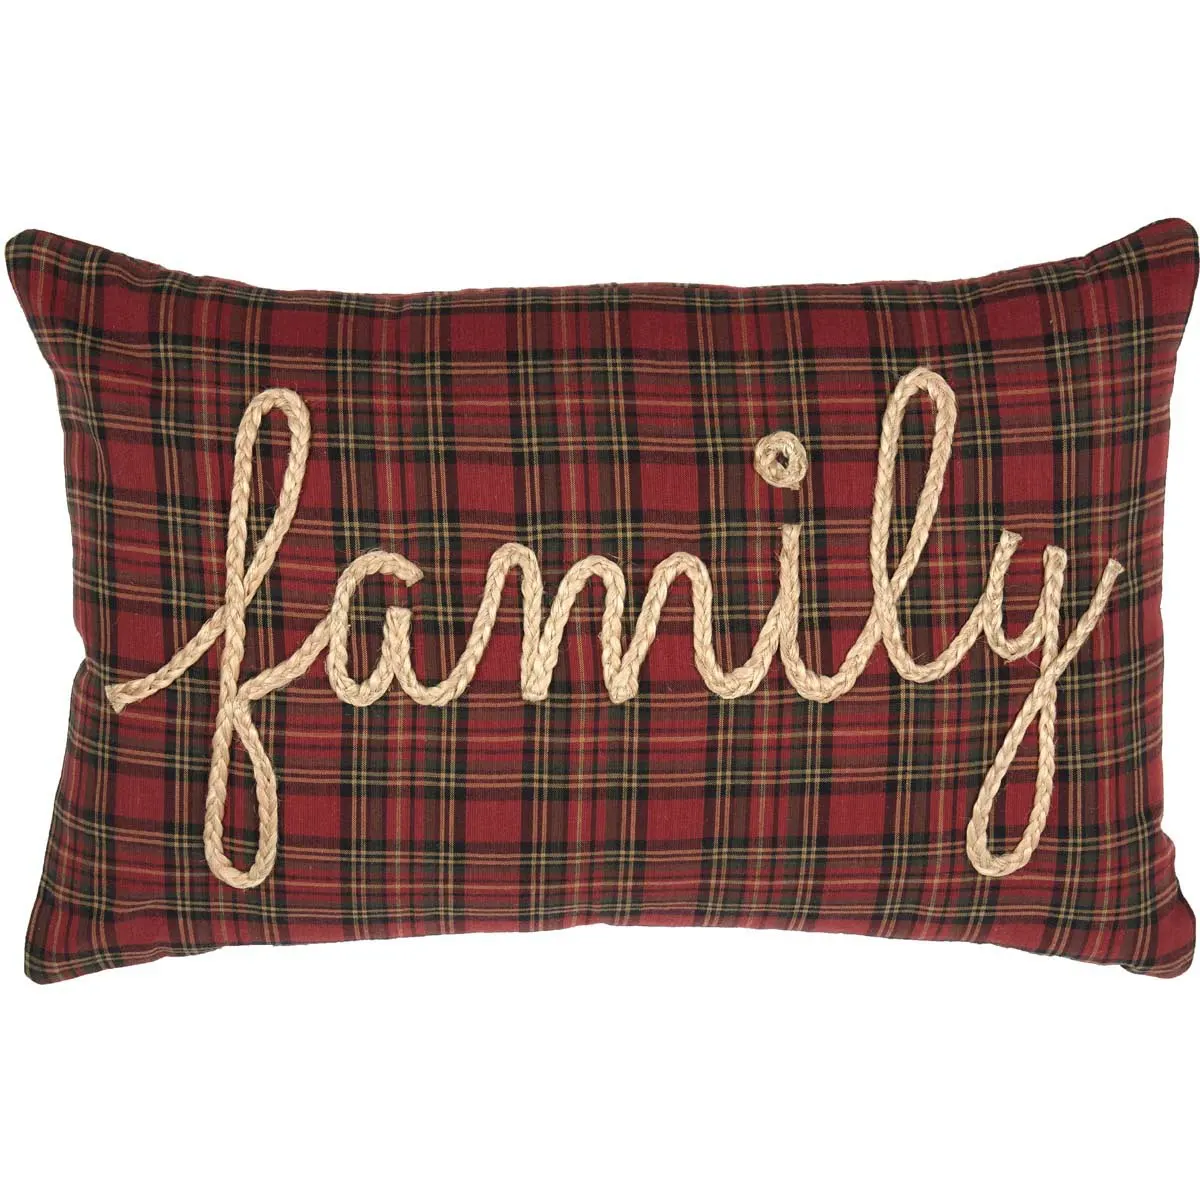 Tea Star Family Pillow 14x22